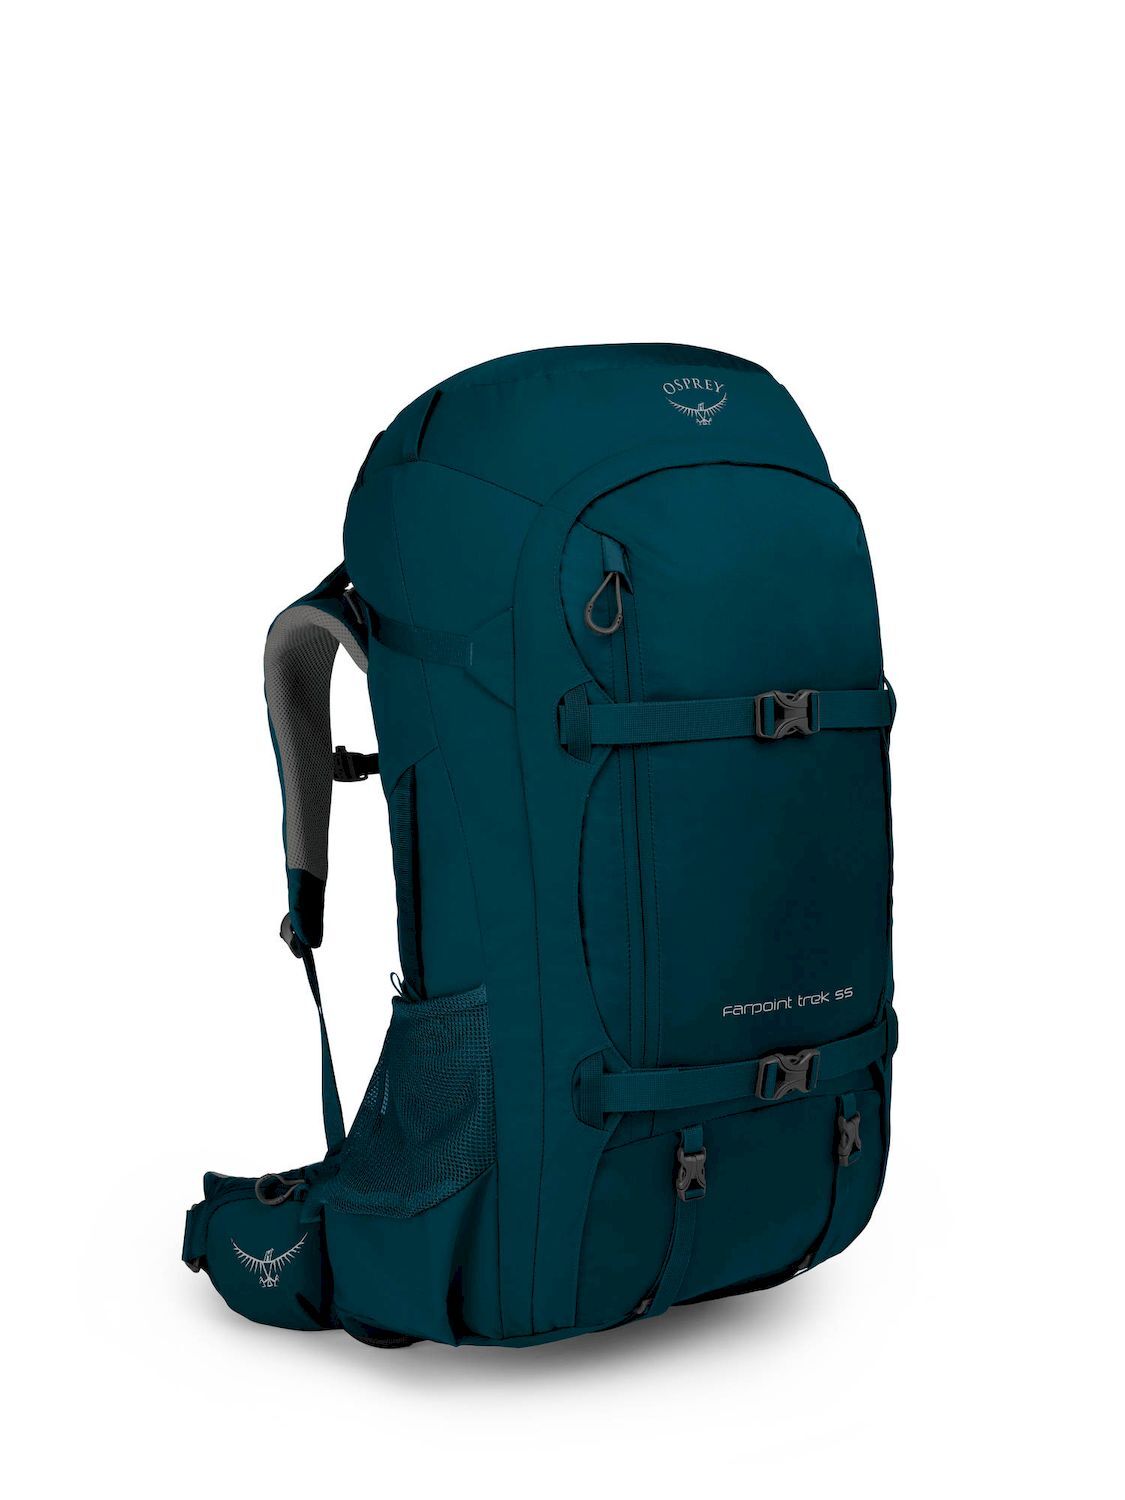 Osprey Farpoint Trek 55 - Hiking backpack - Men's